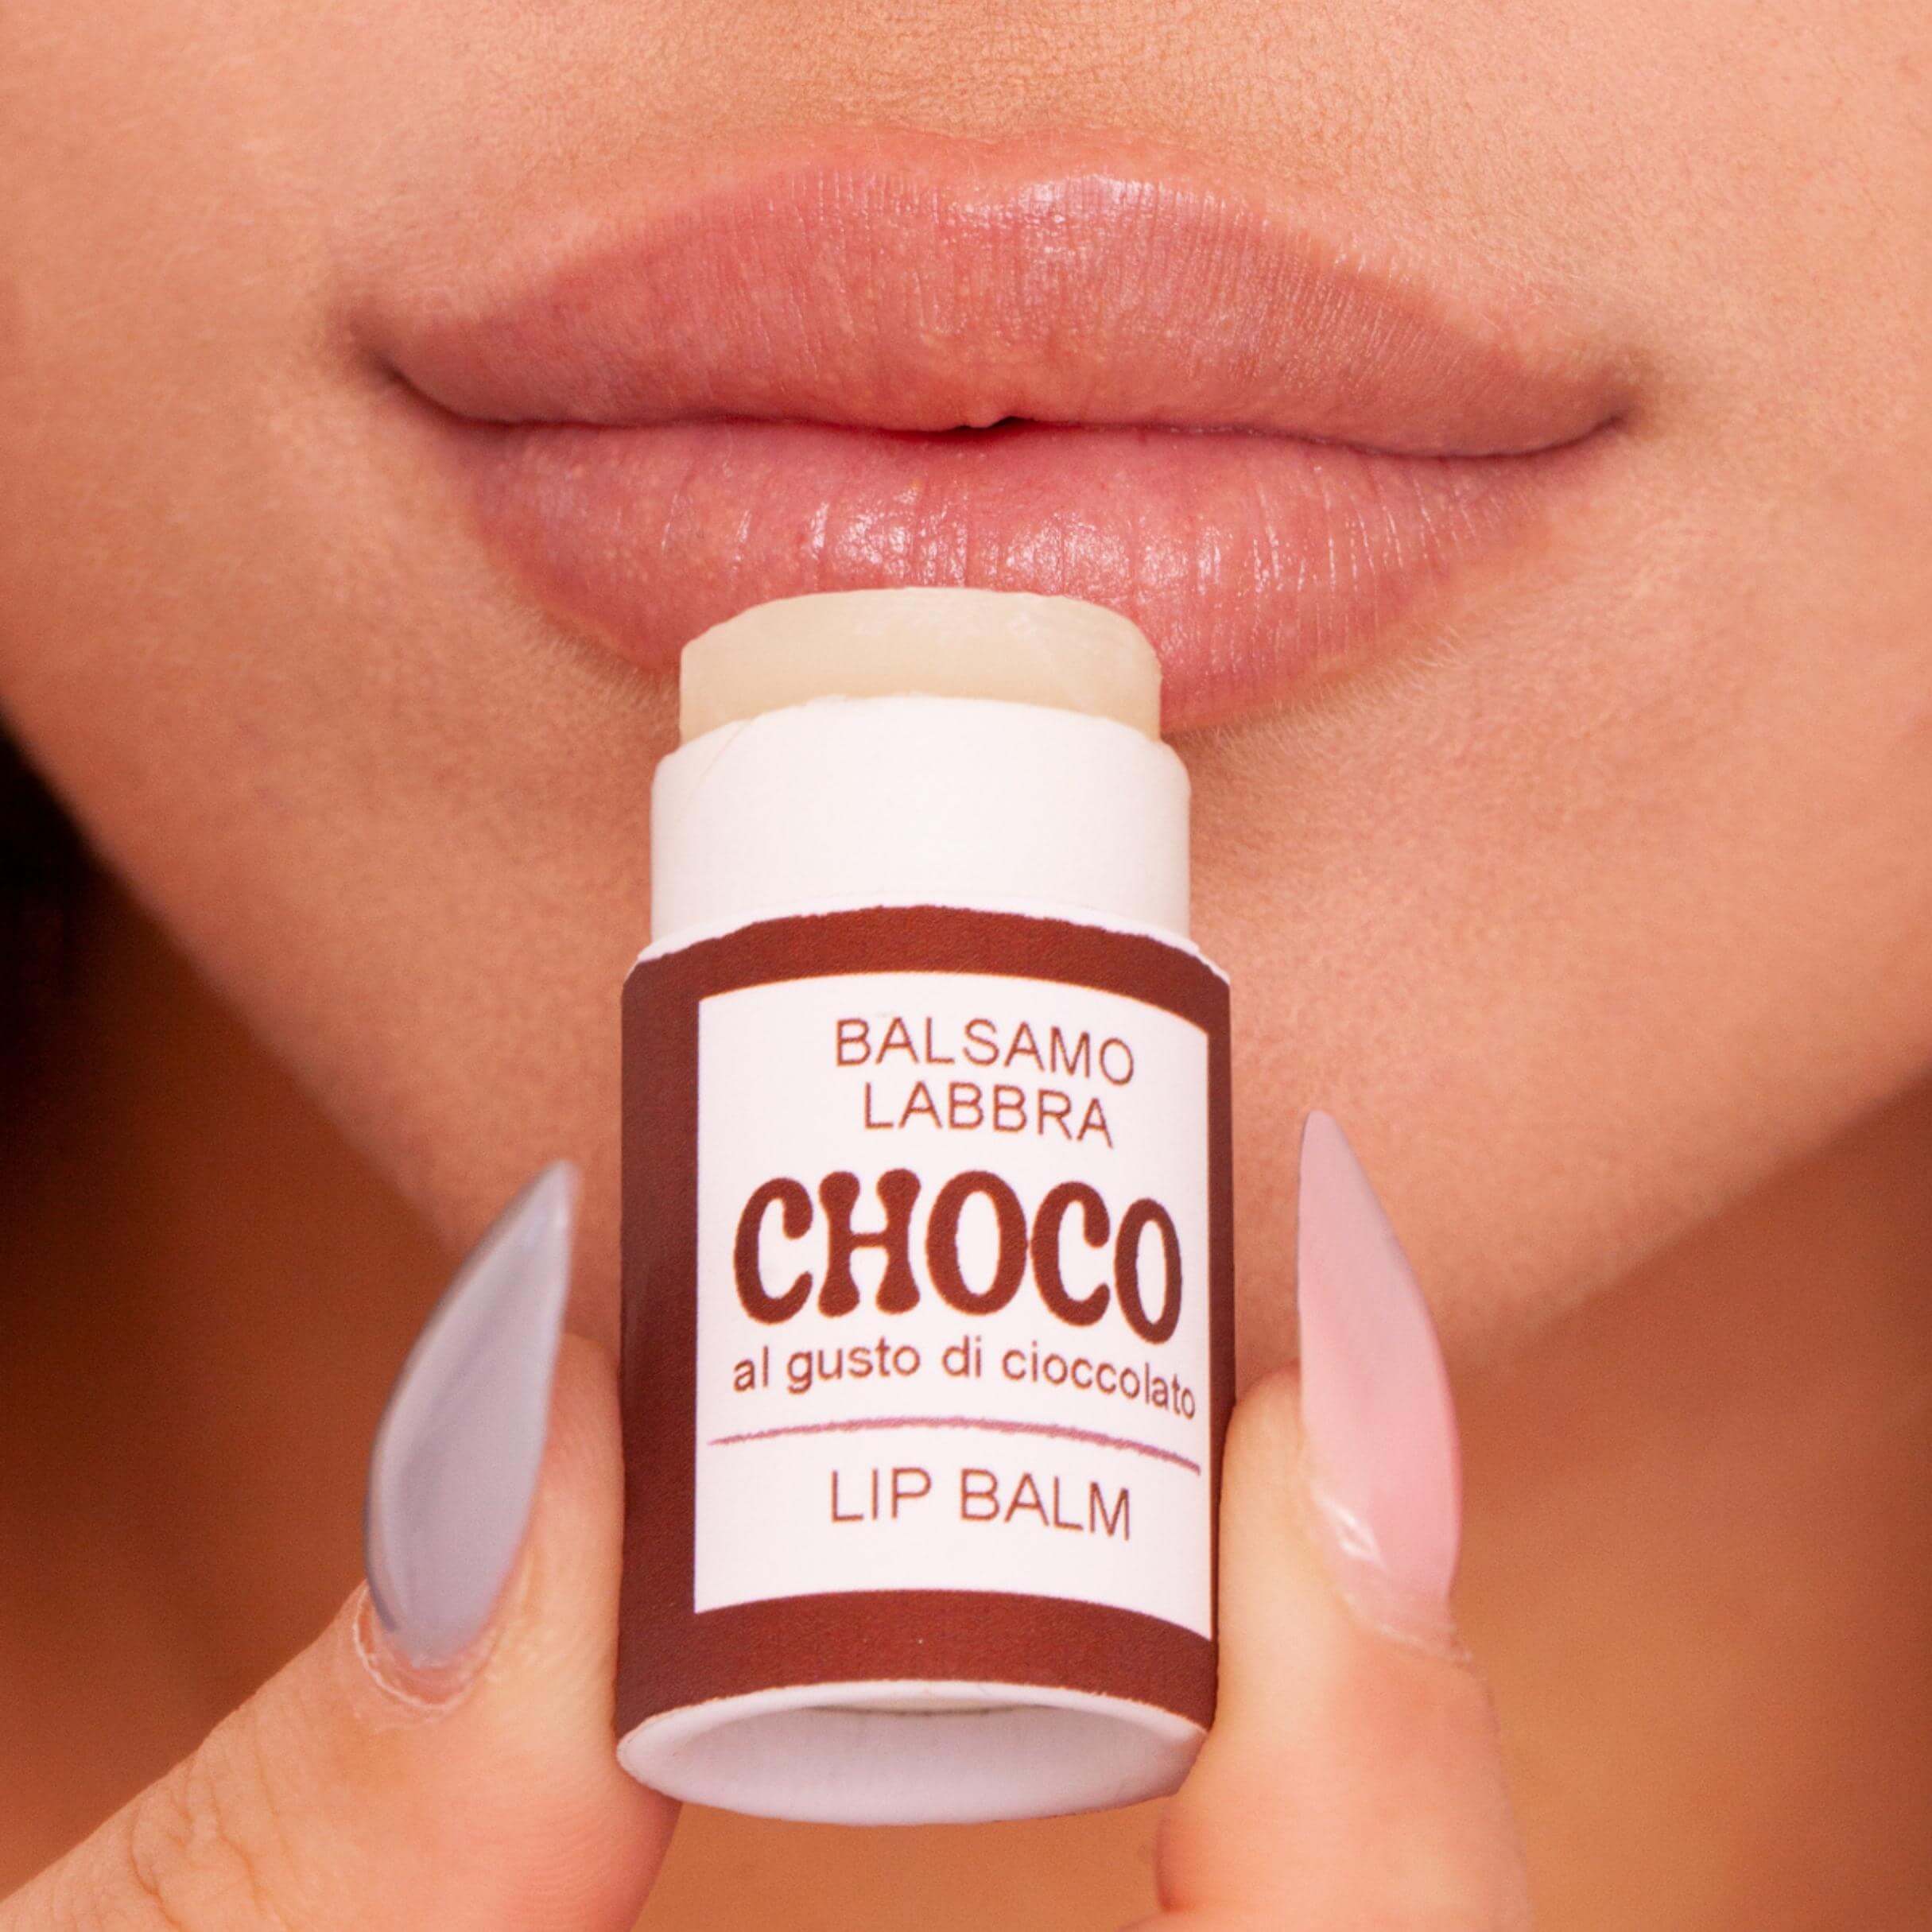 Balsamo Labbra Cioccolato